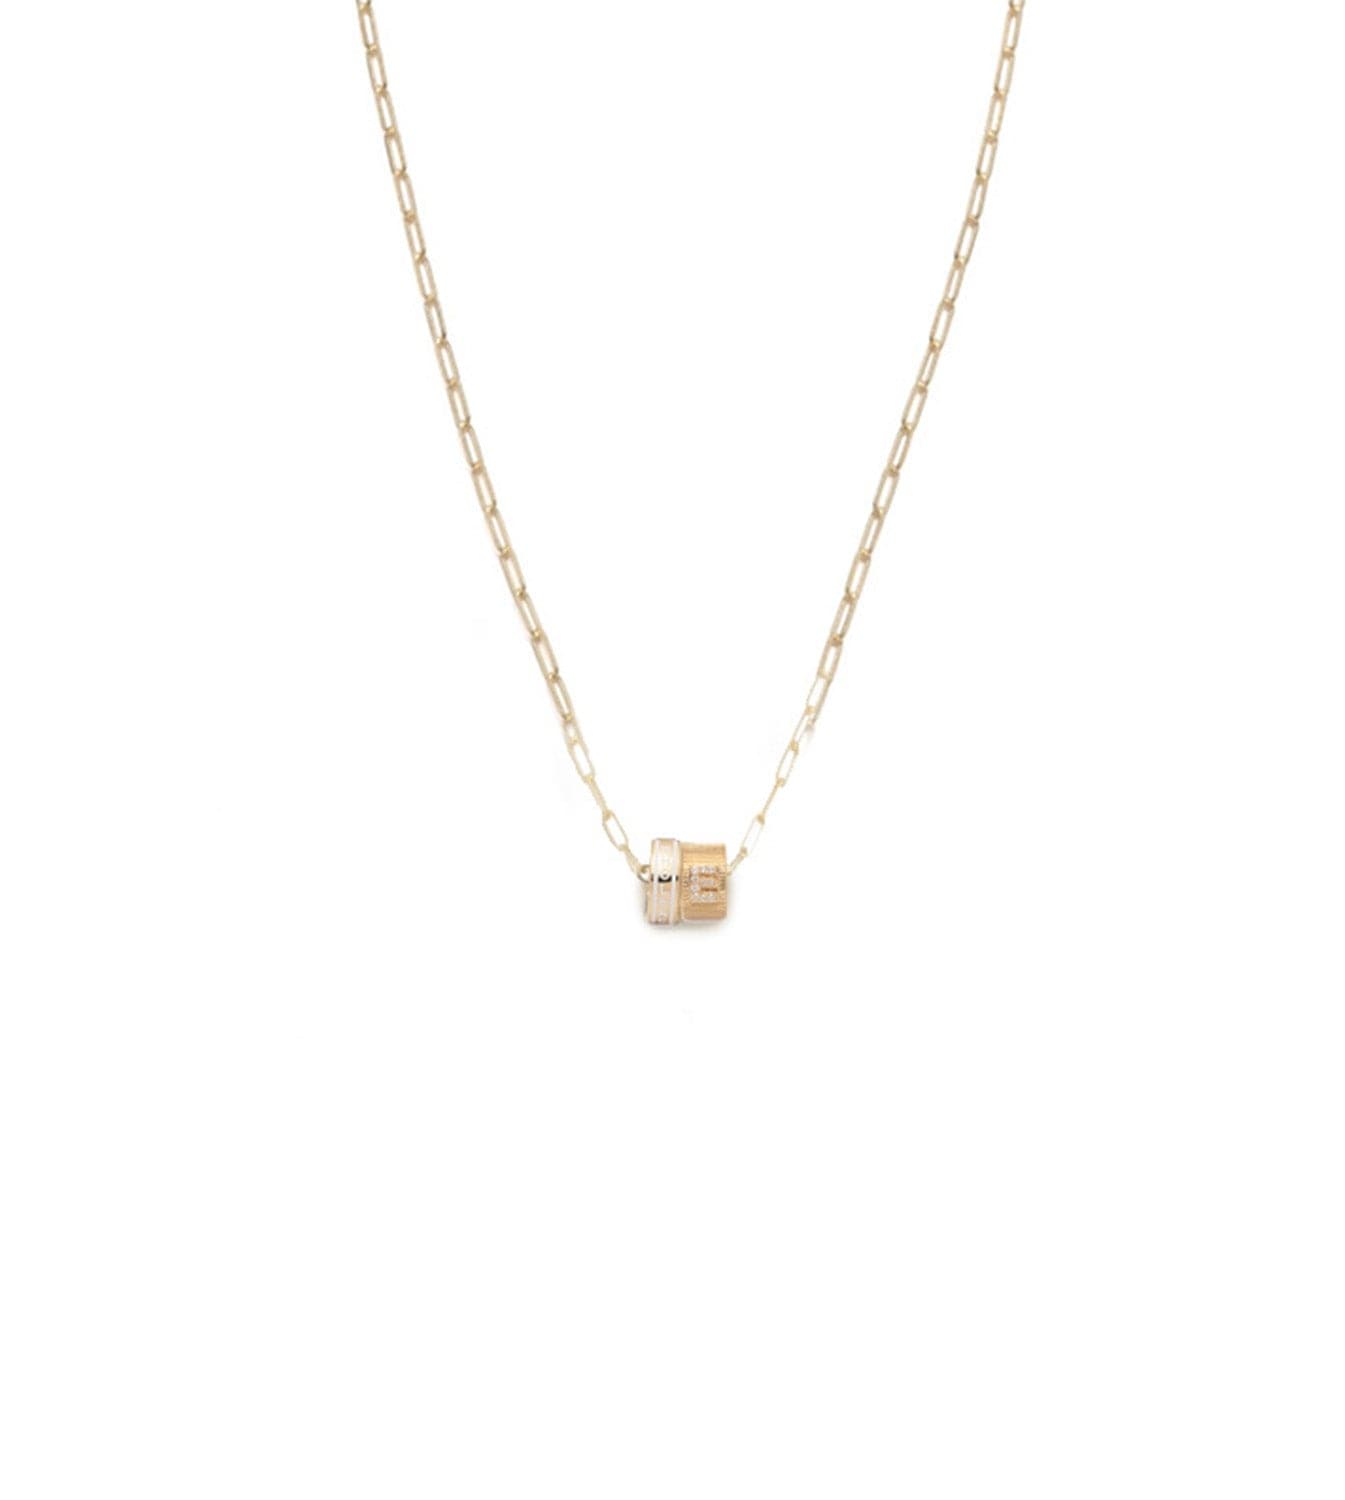 Wholeness & Pave Diamond Initial : Heart Beat Super Fine Clip Chain Necklace